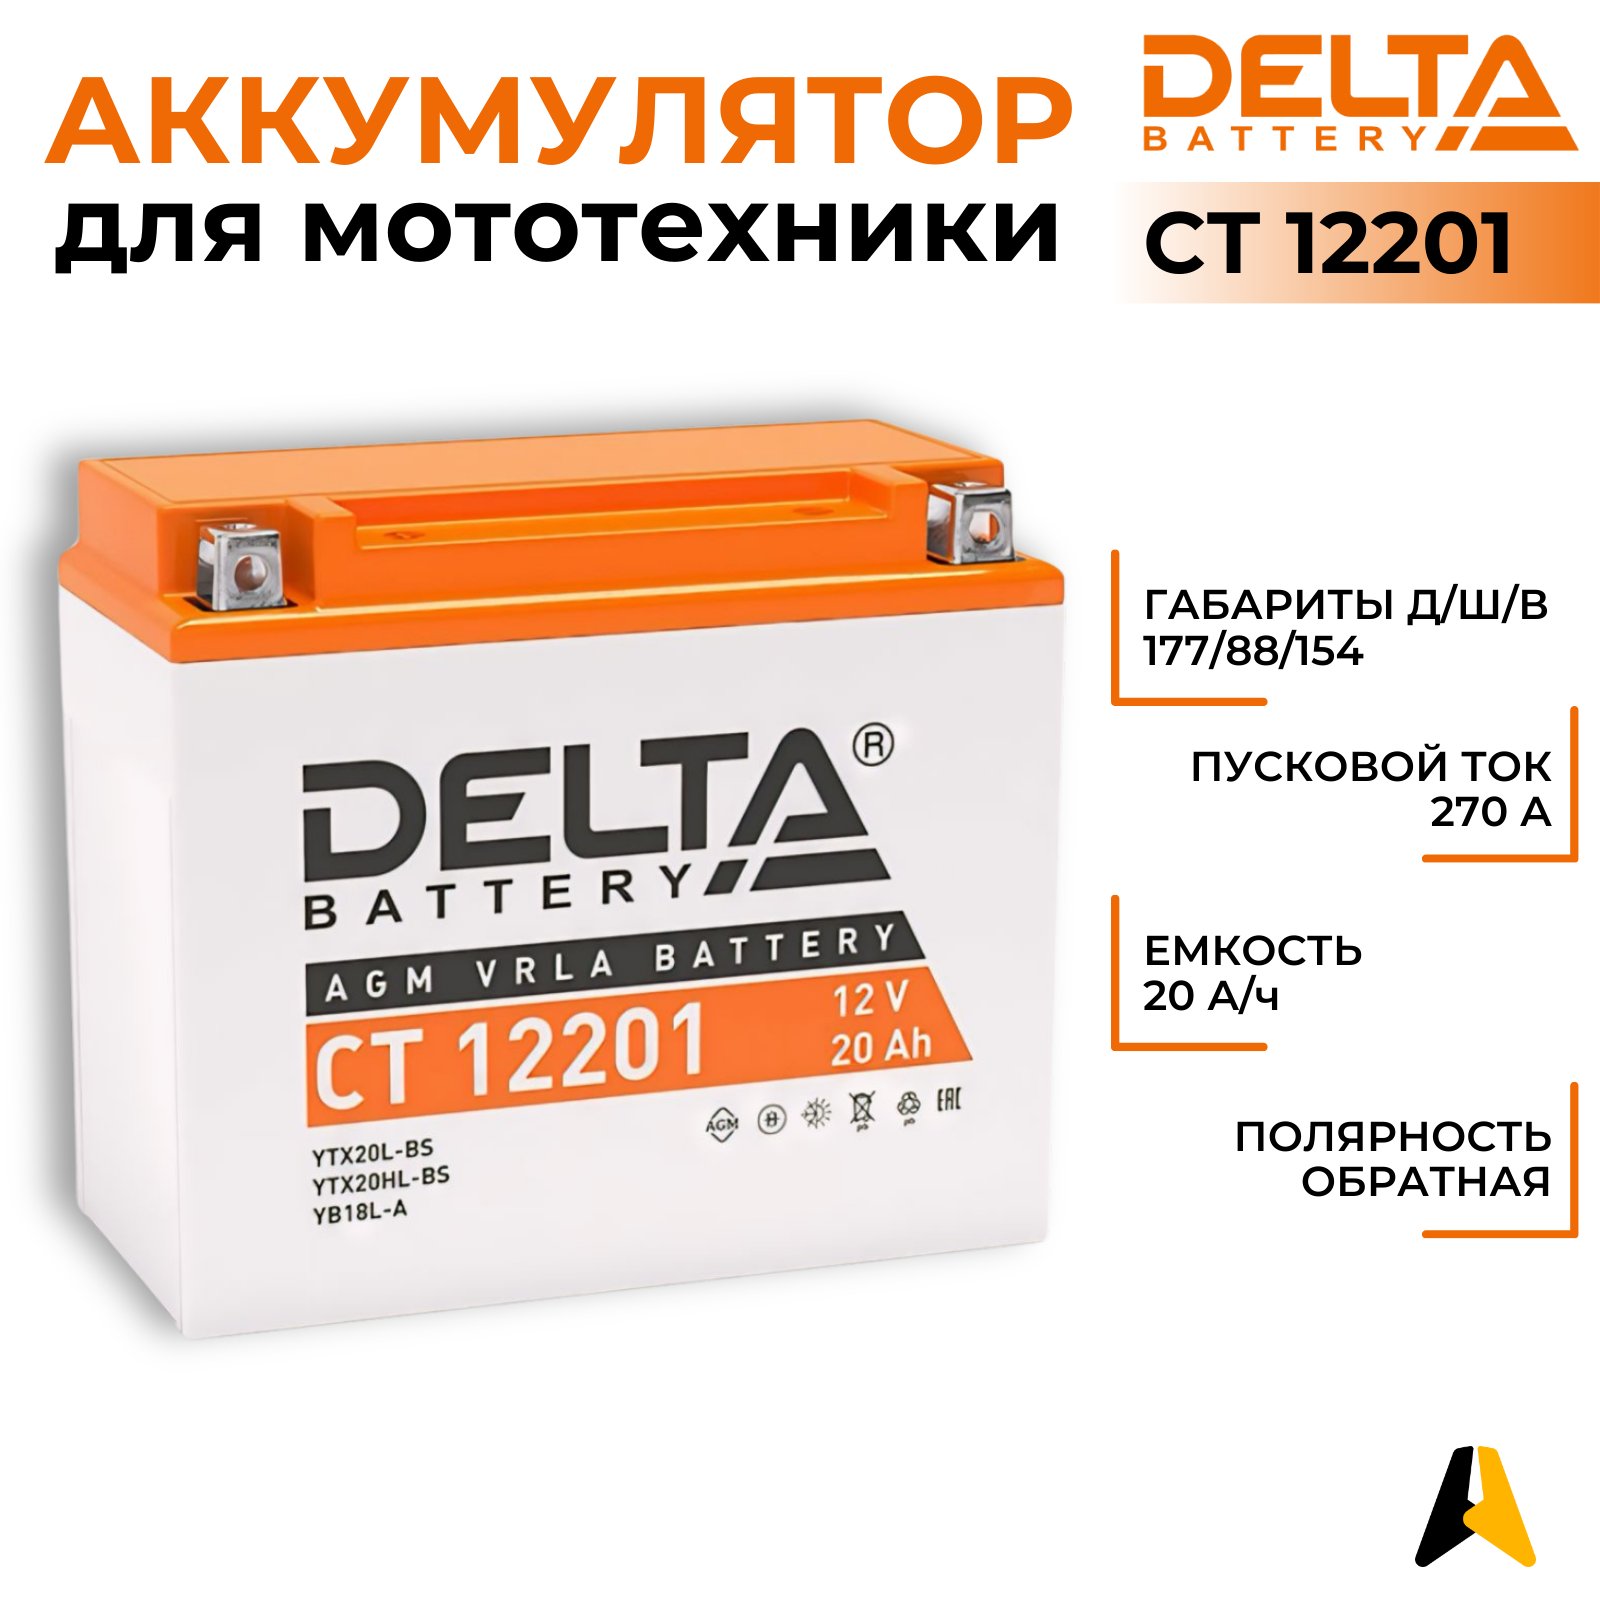 Мото аккумулятор DELTA Battery CT 12201